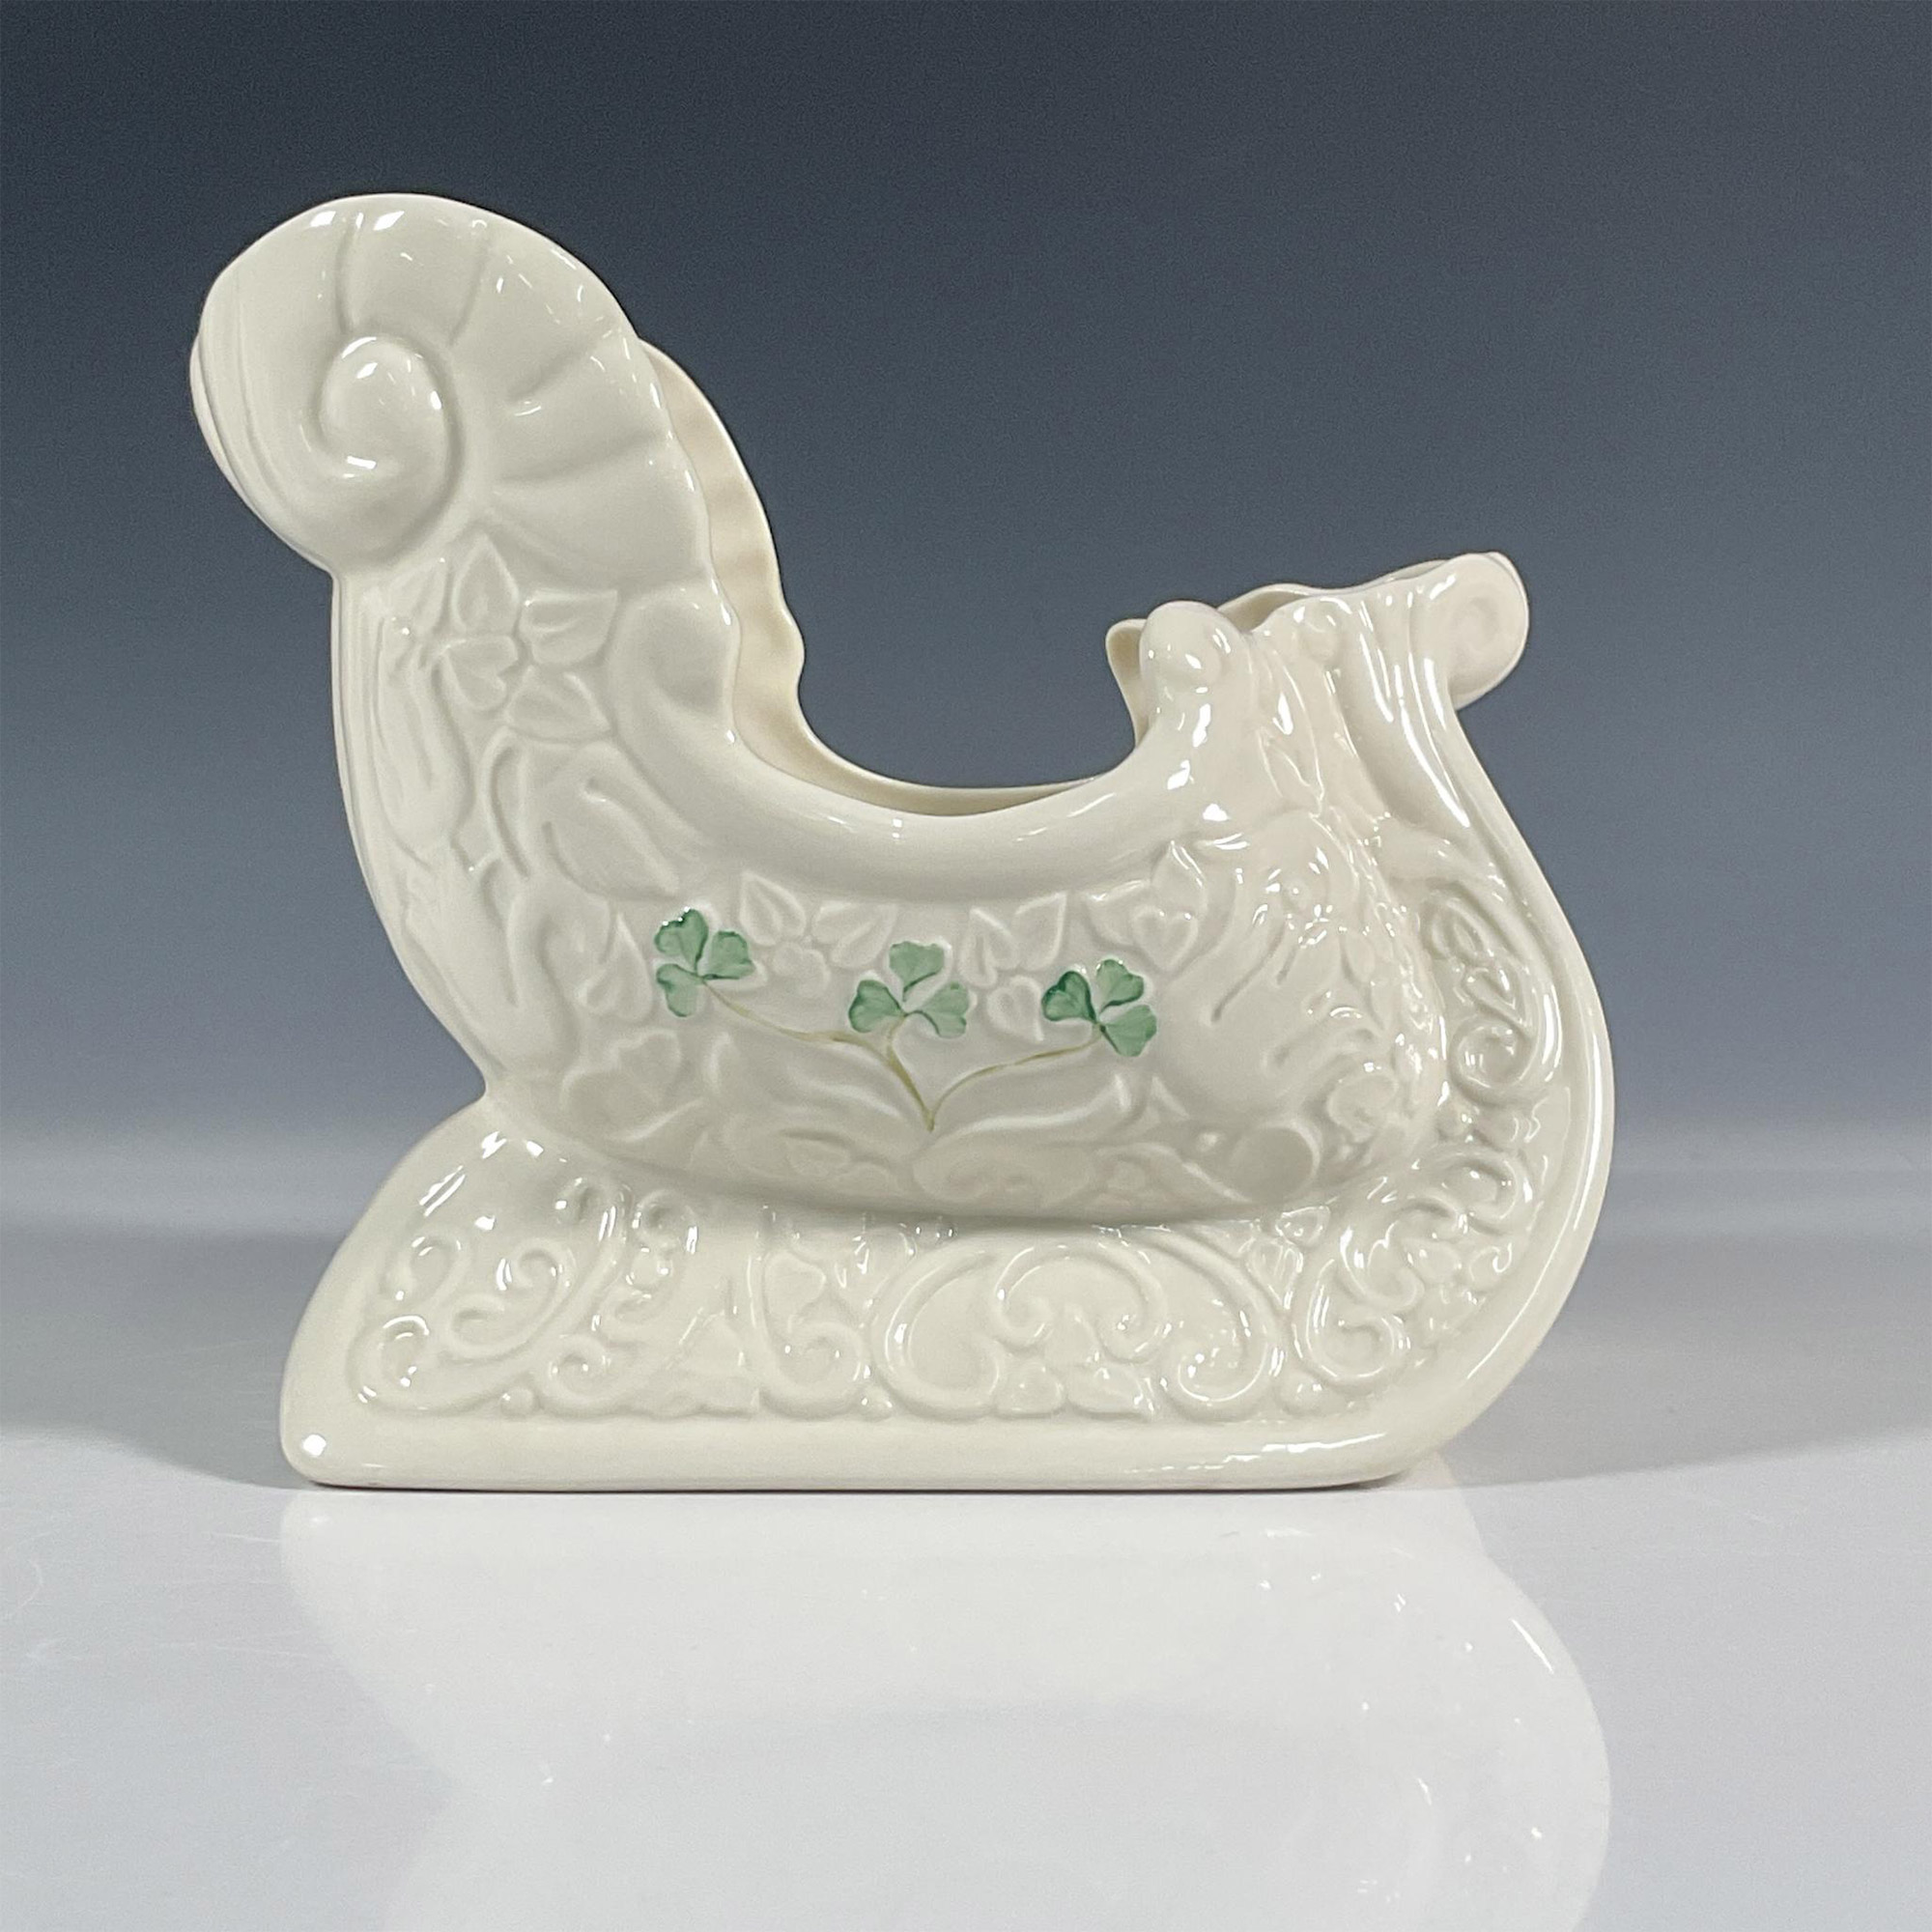 Belleek Pottery Porcelain Sleigh Centerpiece, Shamrock - Image 2 of 5